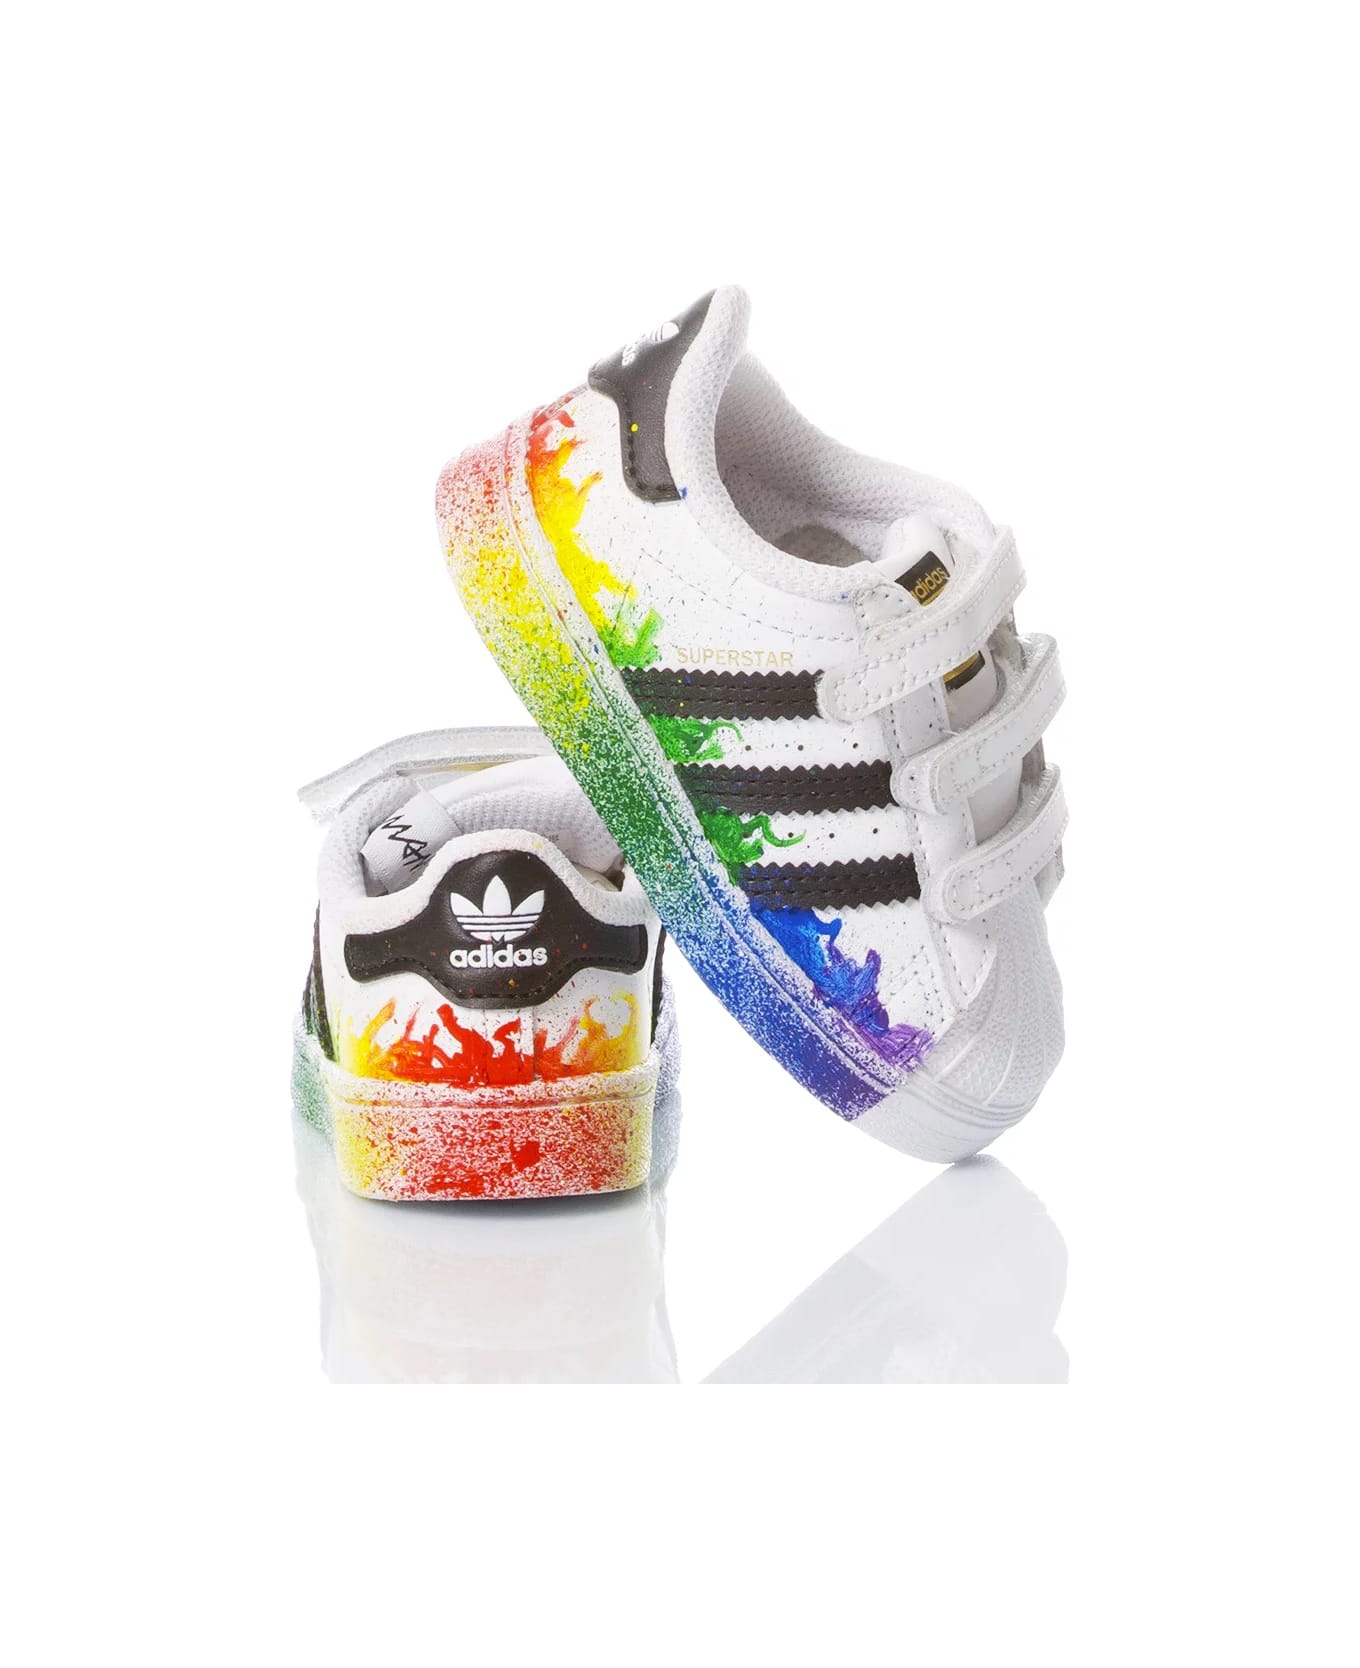 Mimanera Adidas Baby: Customize Your Little Shoe!